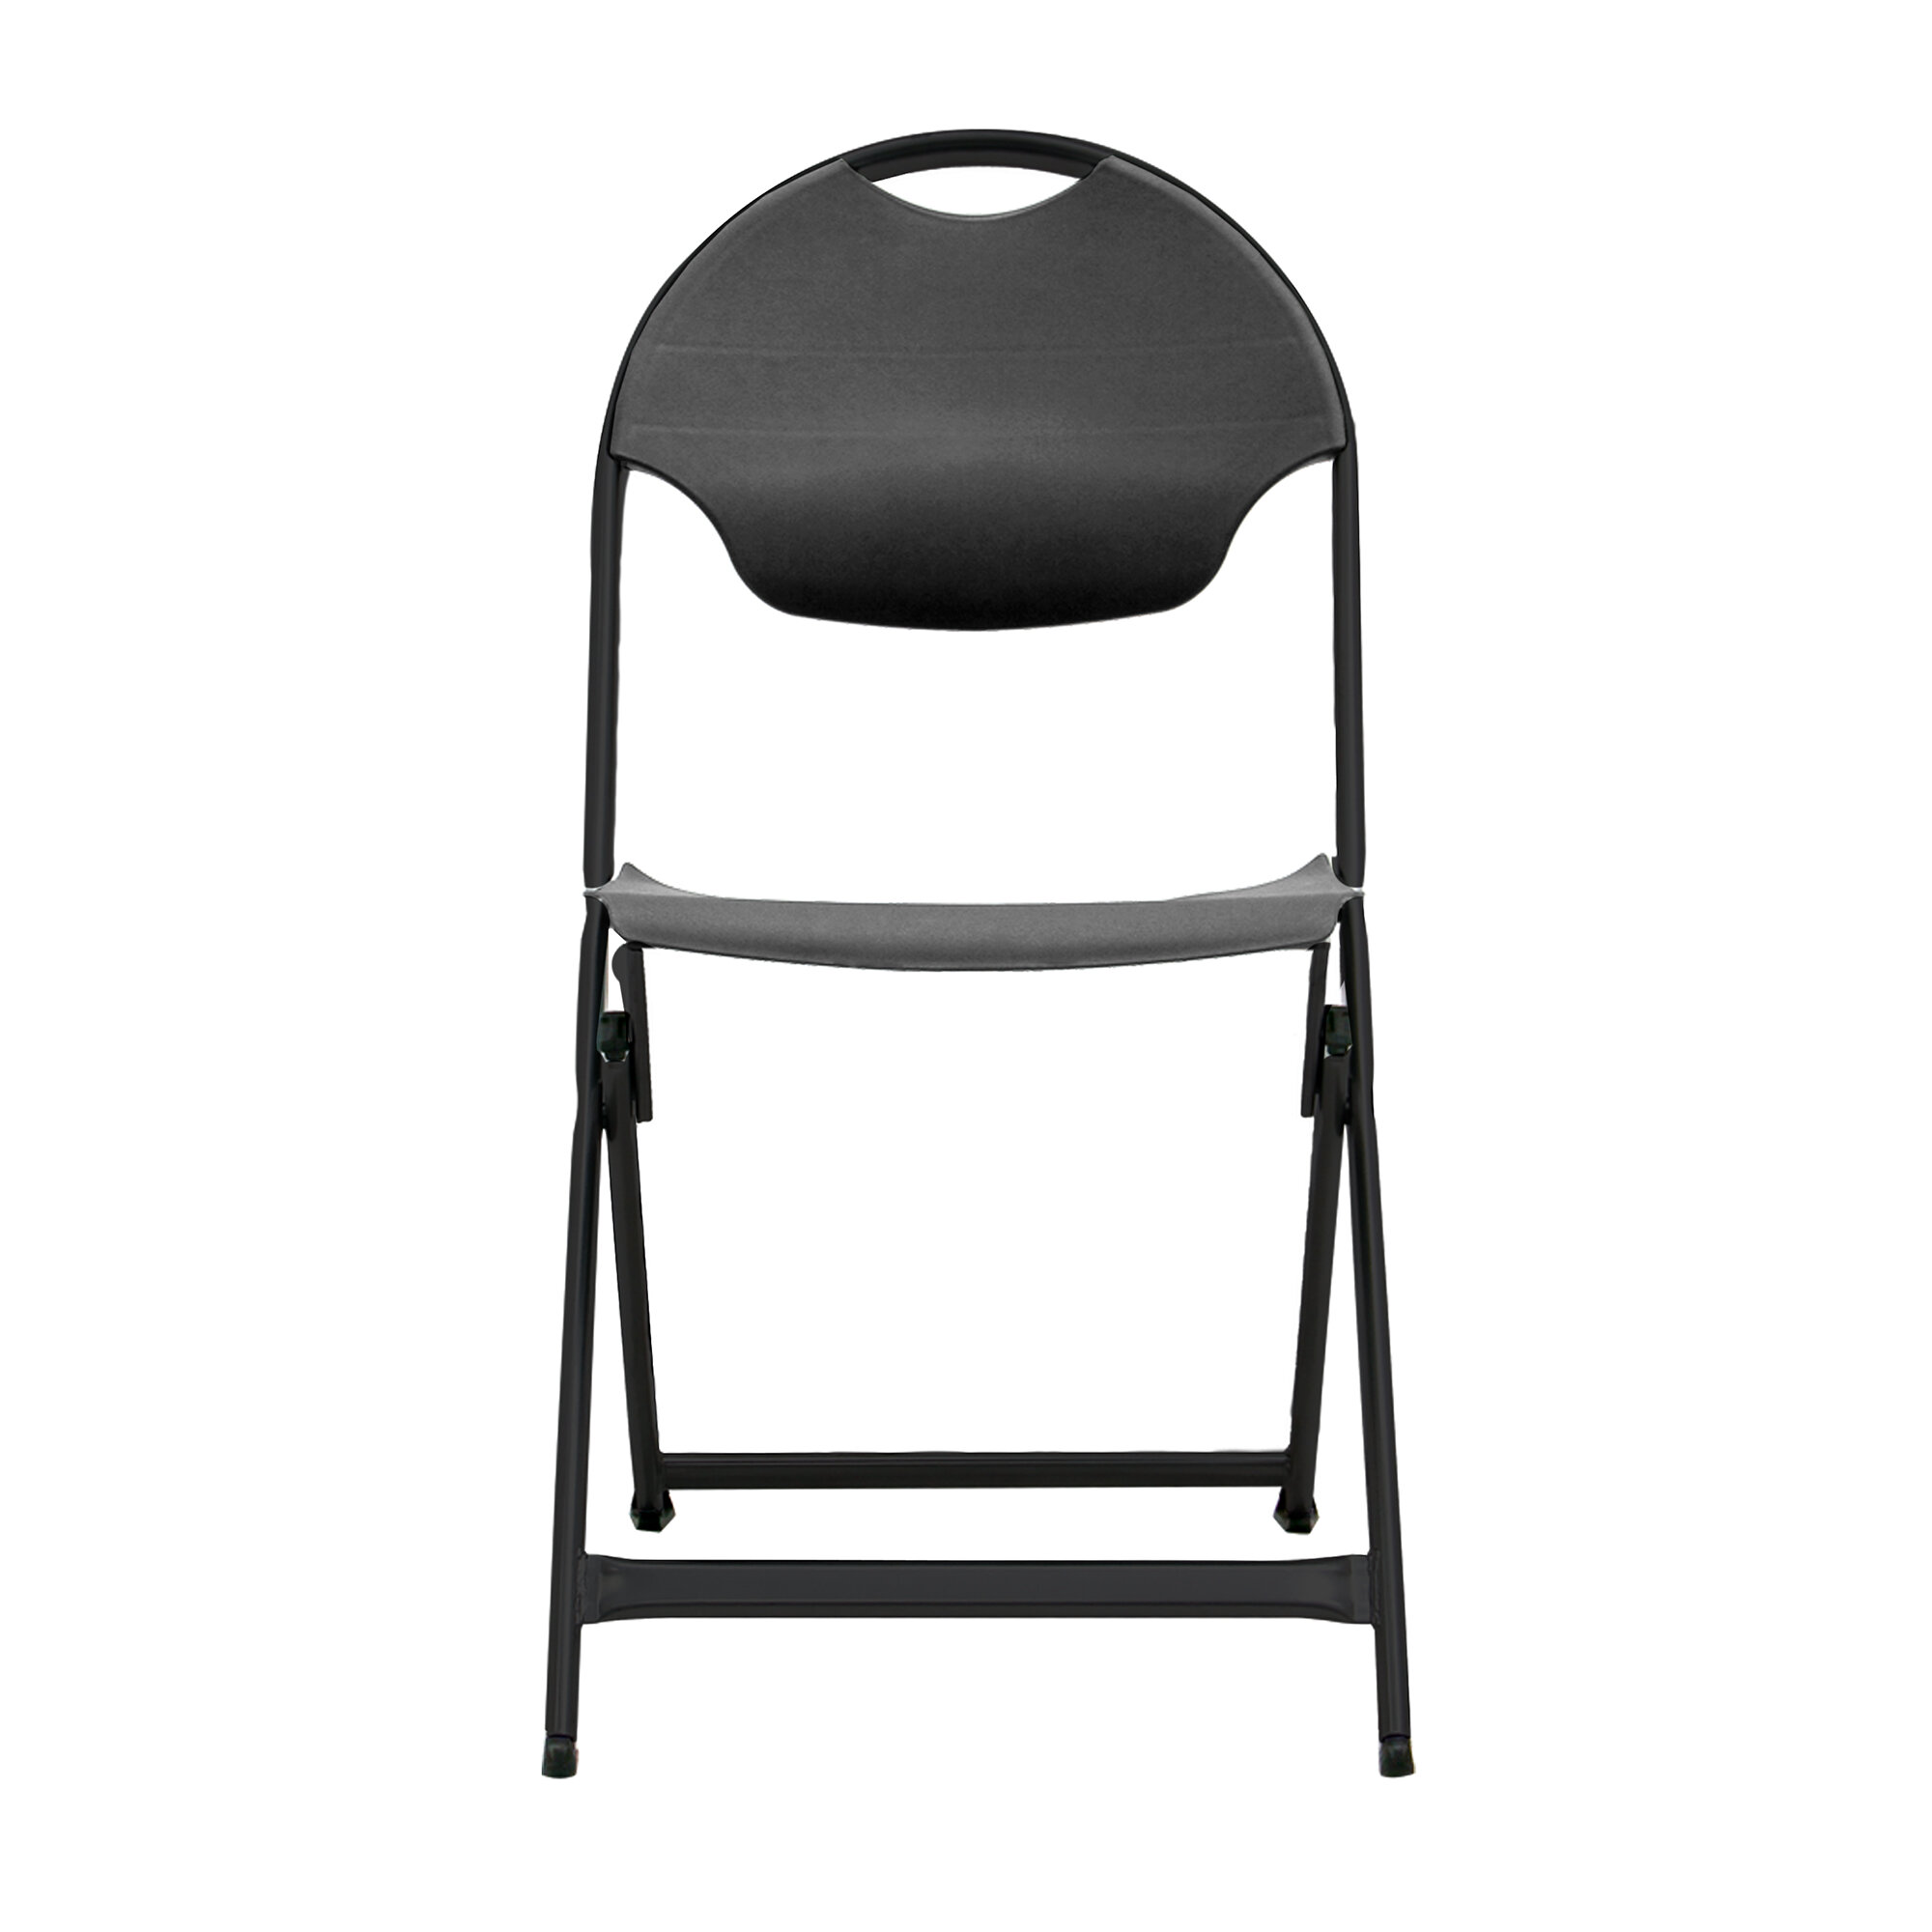 mity lite flex one folding chair black